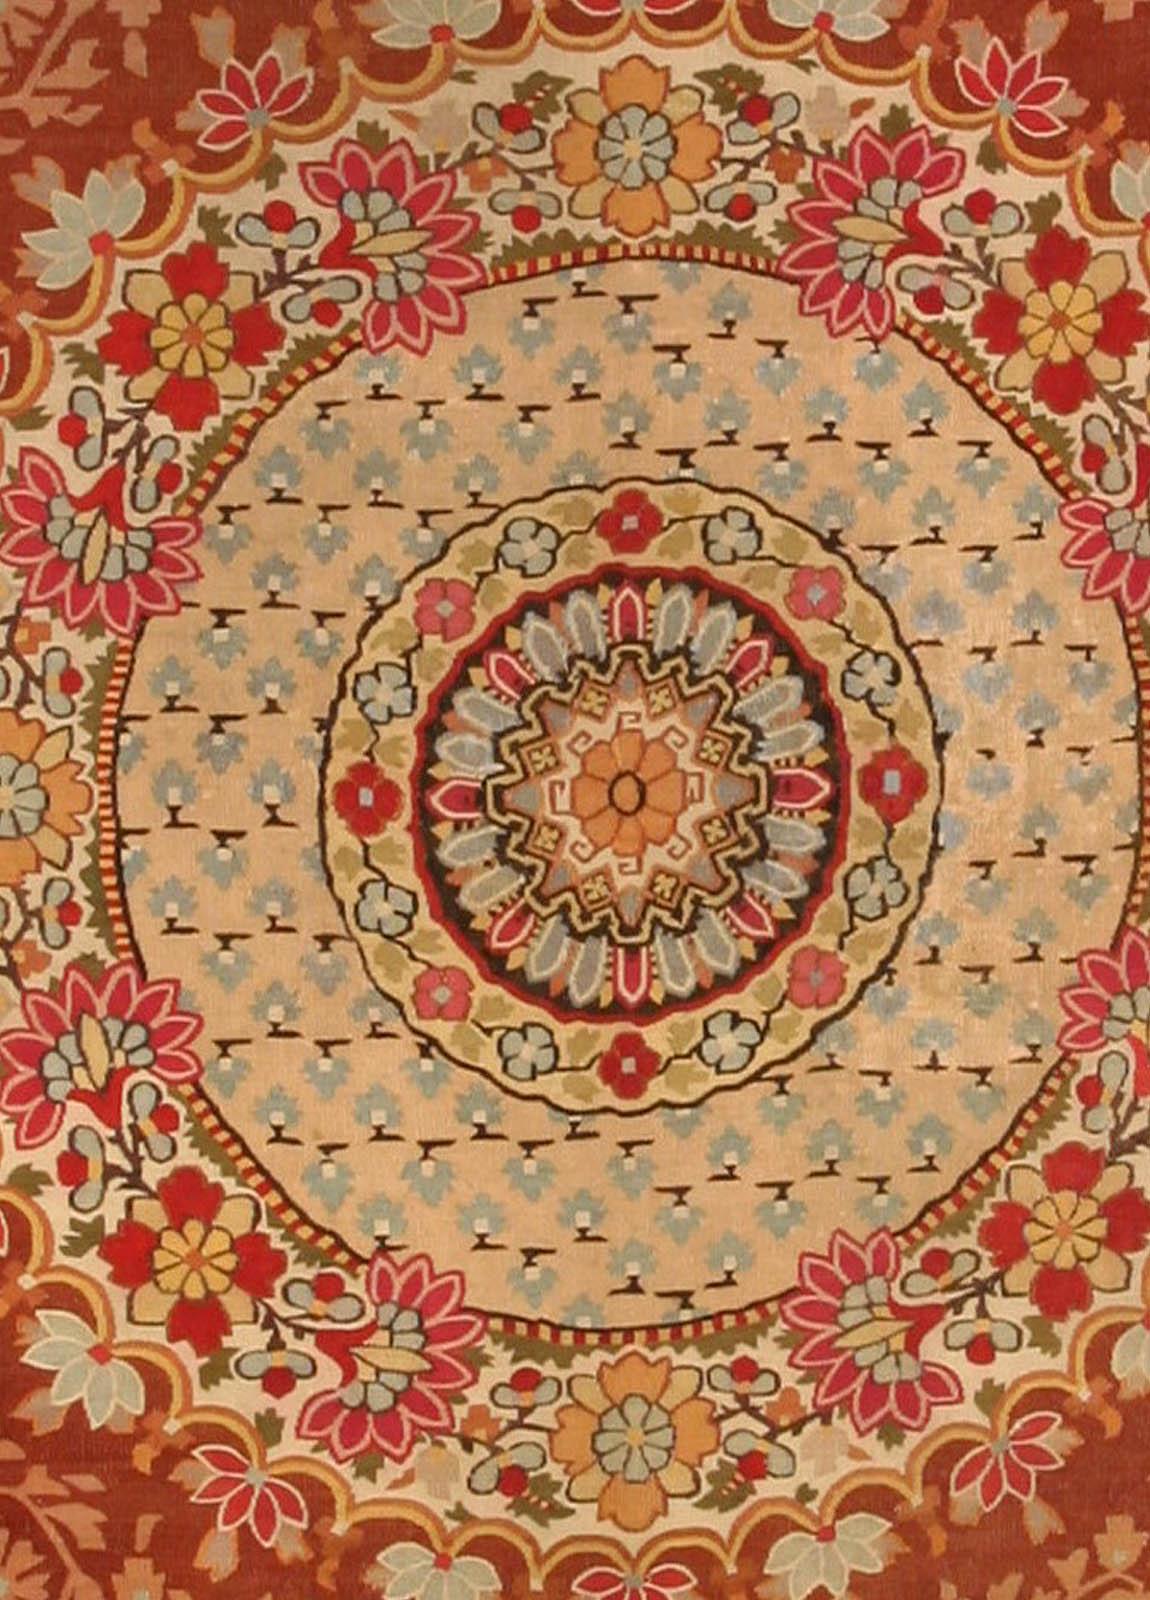 Antique French Aubusson red botanic handmade wool rug
Size: 13'5